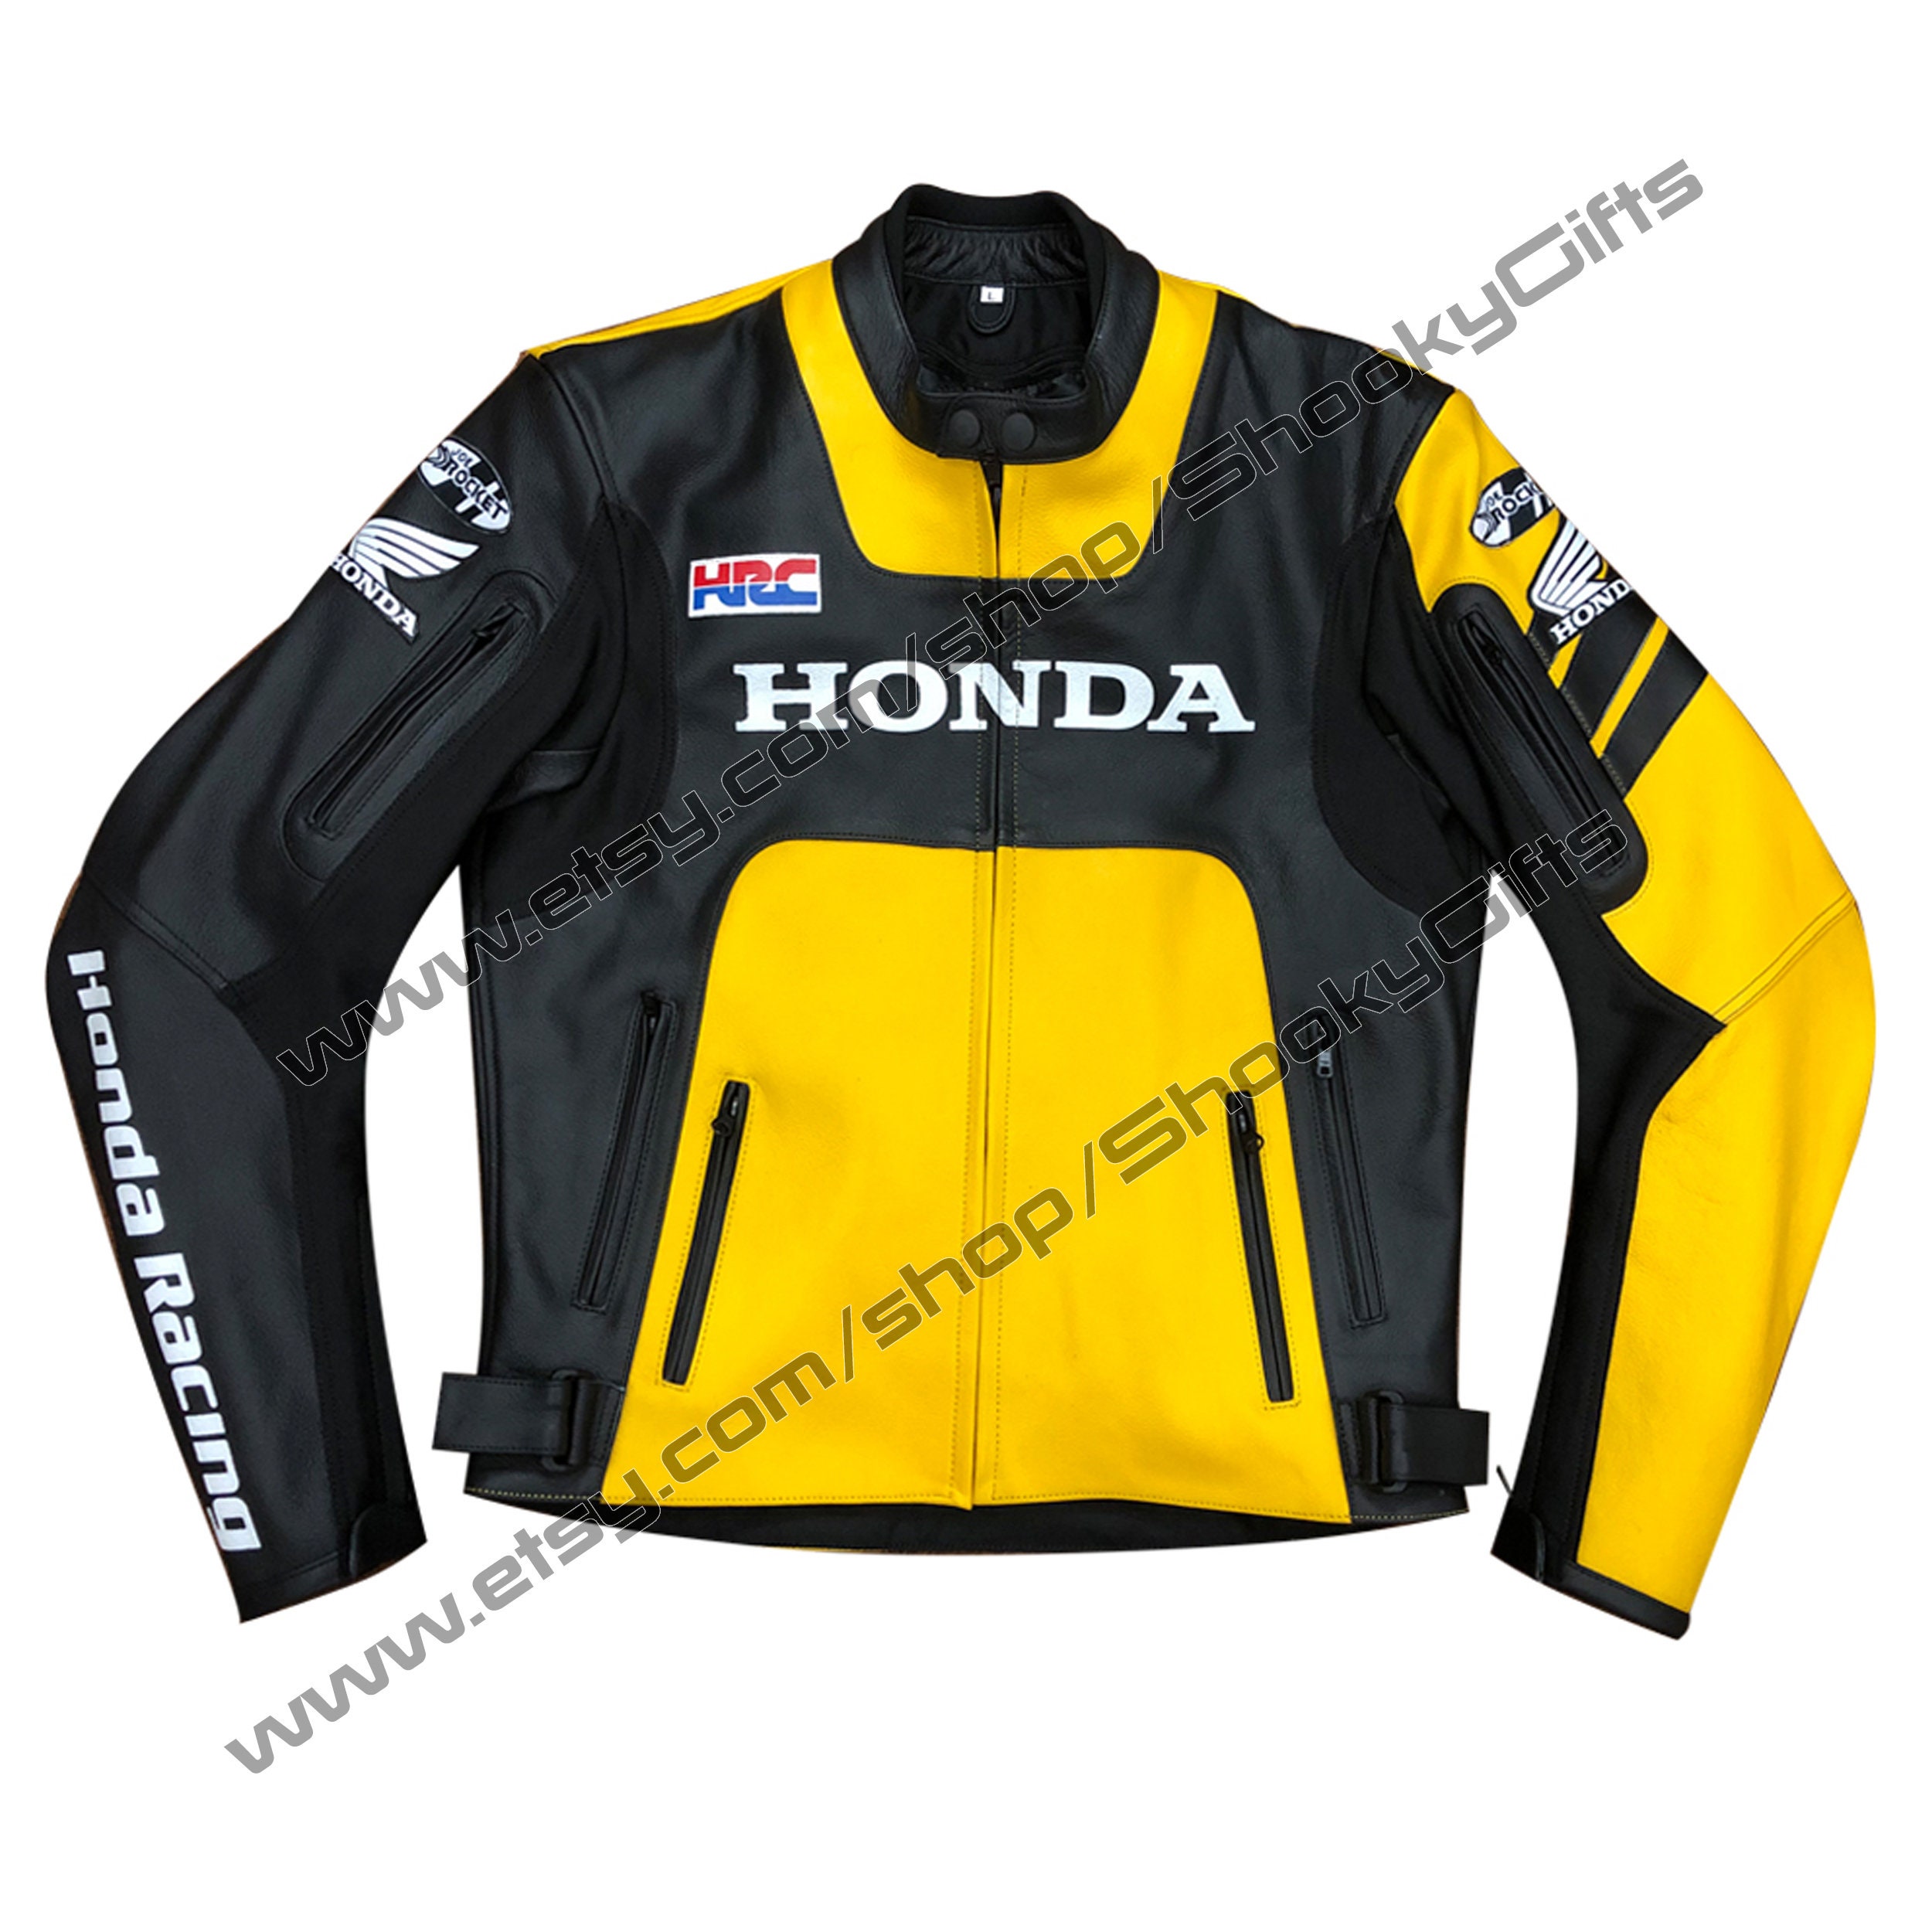 Honda HRC Leather Motorcycle Racing Jacket - Etsy